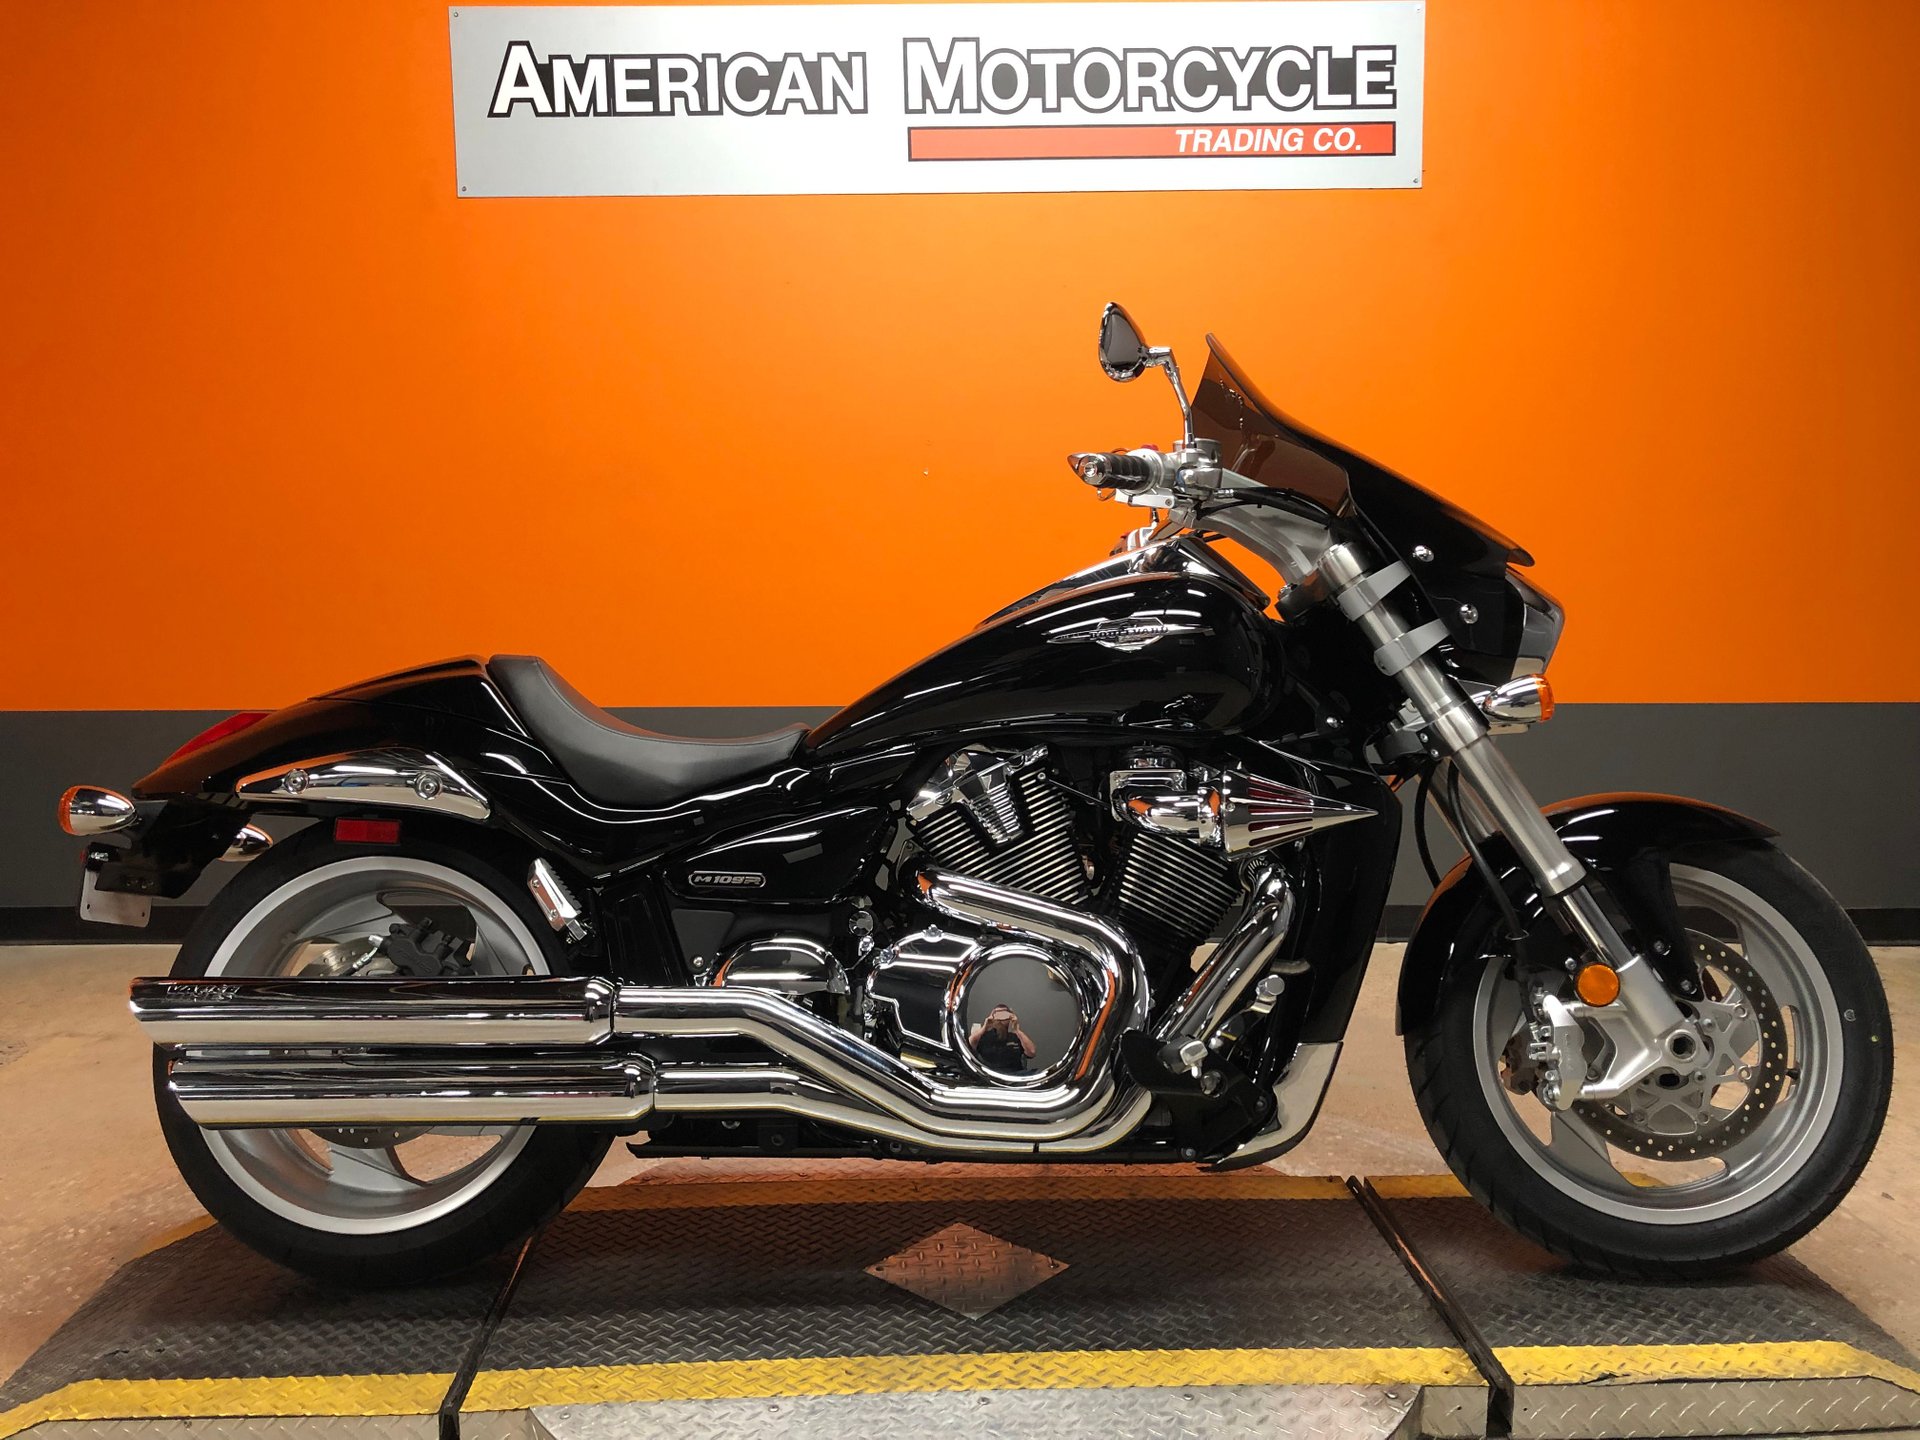 2013 Suzuki Boulevard | American Motorcycle Trading Company - Used ...